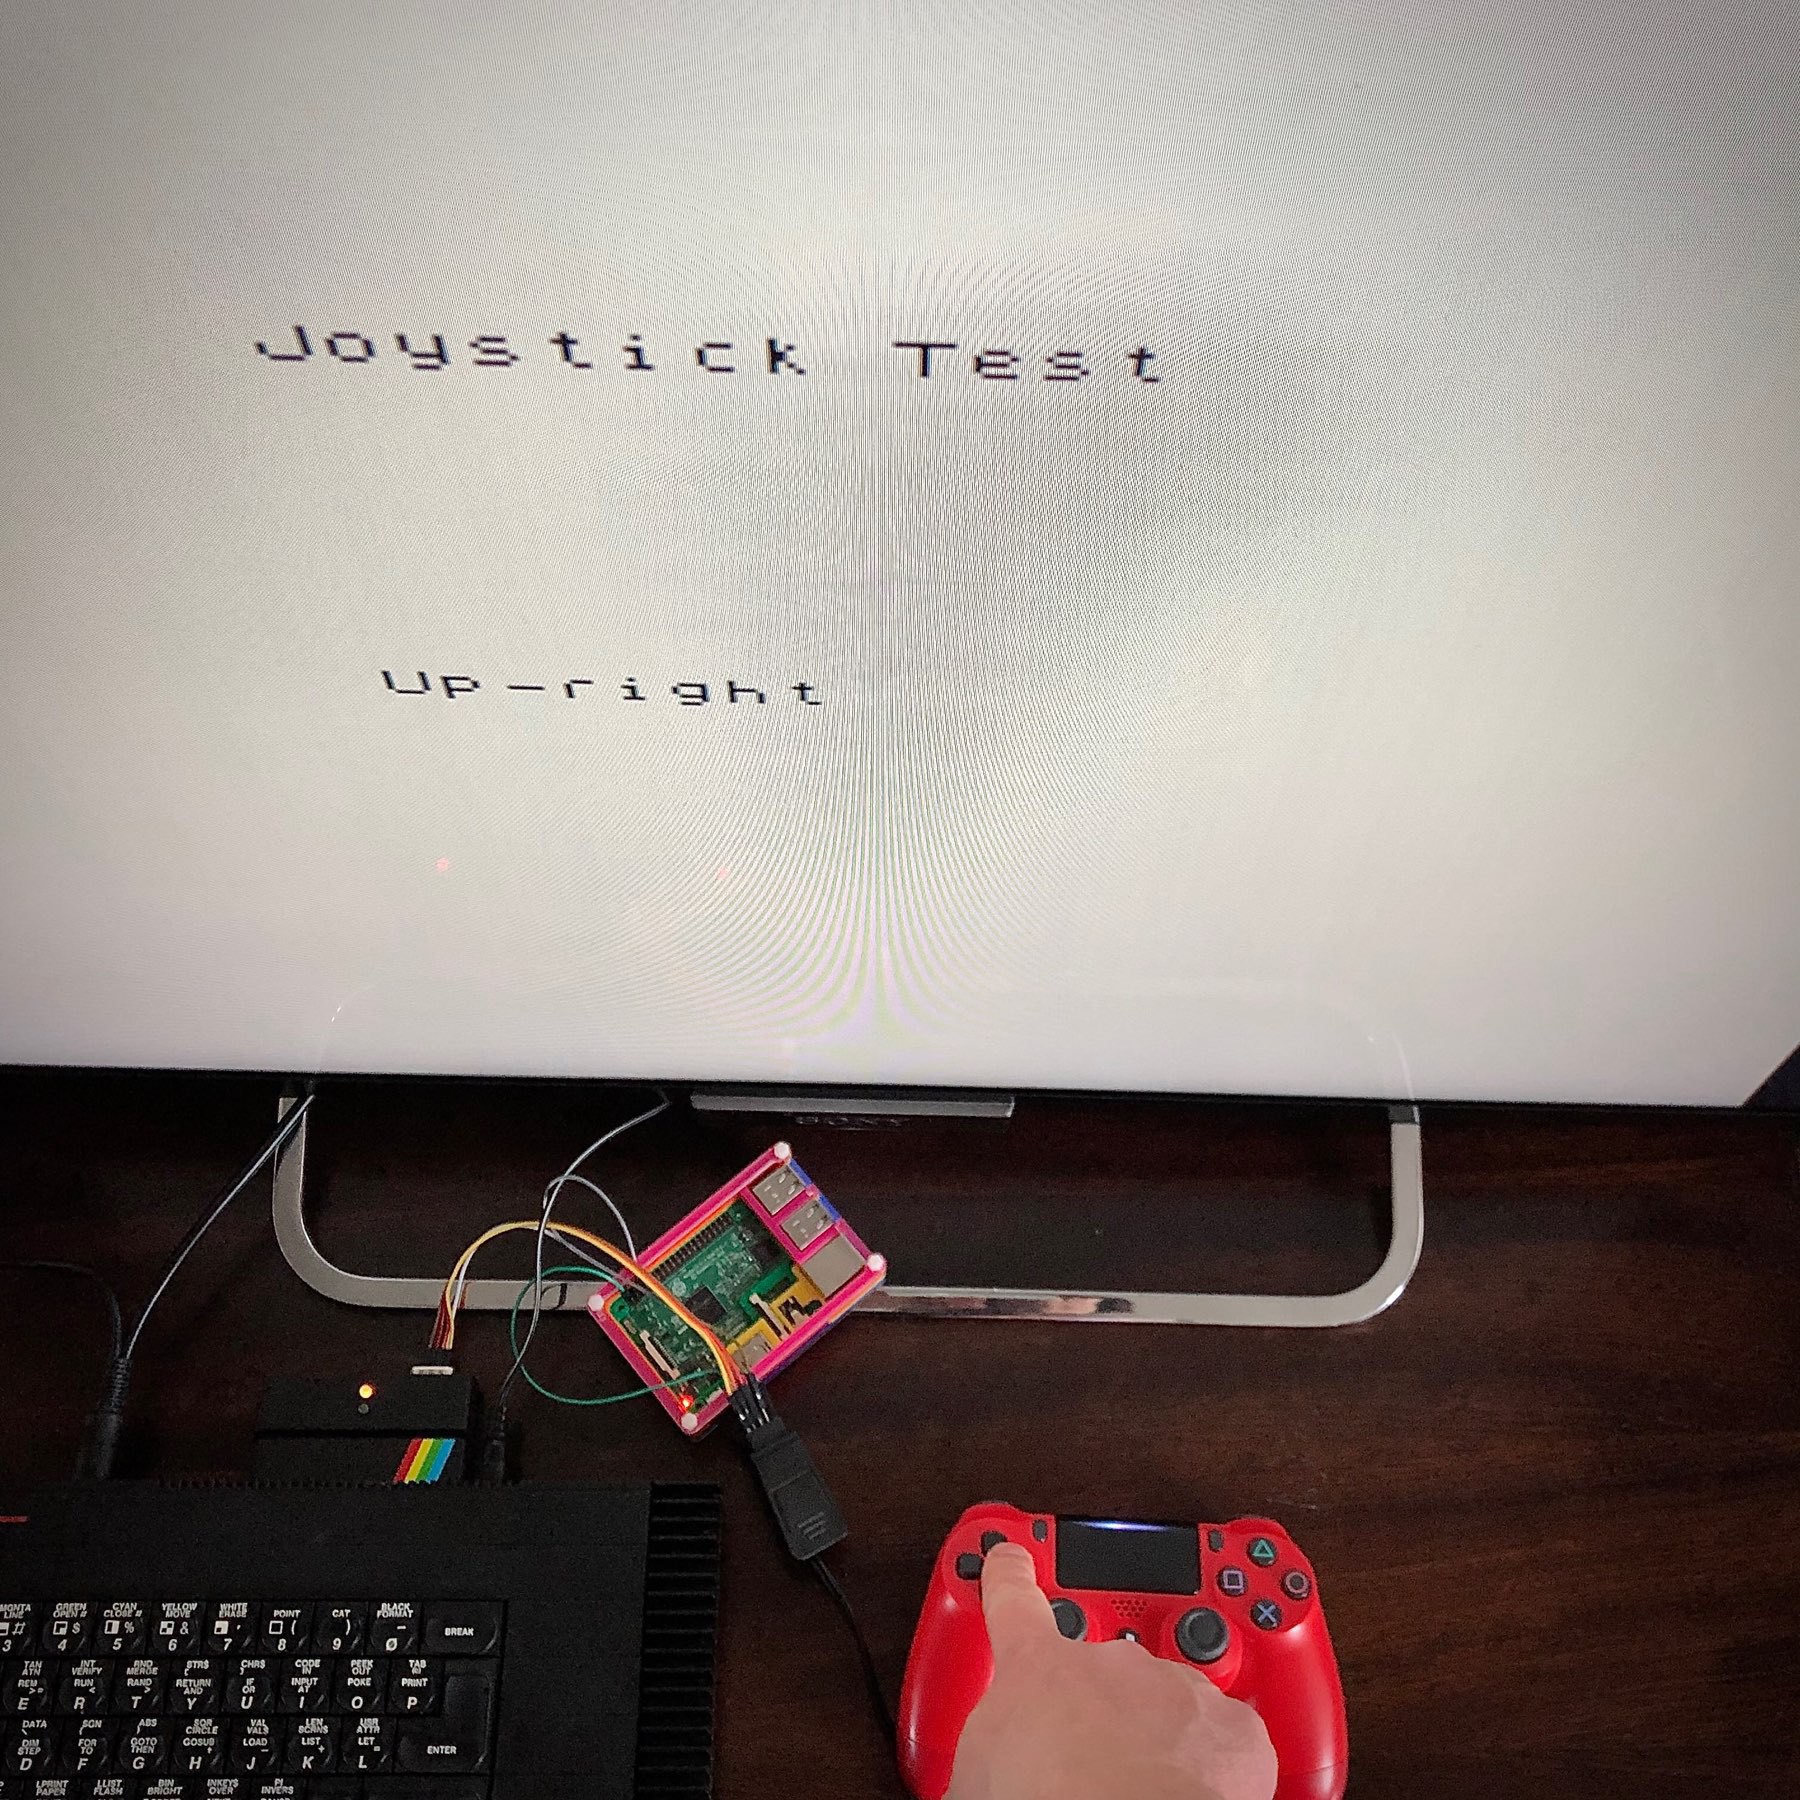 ZX Spectrum joustick test program